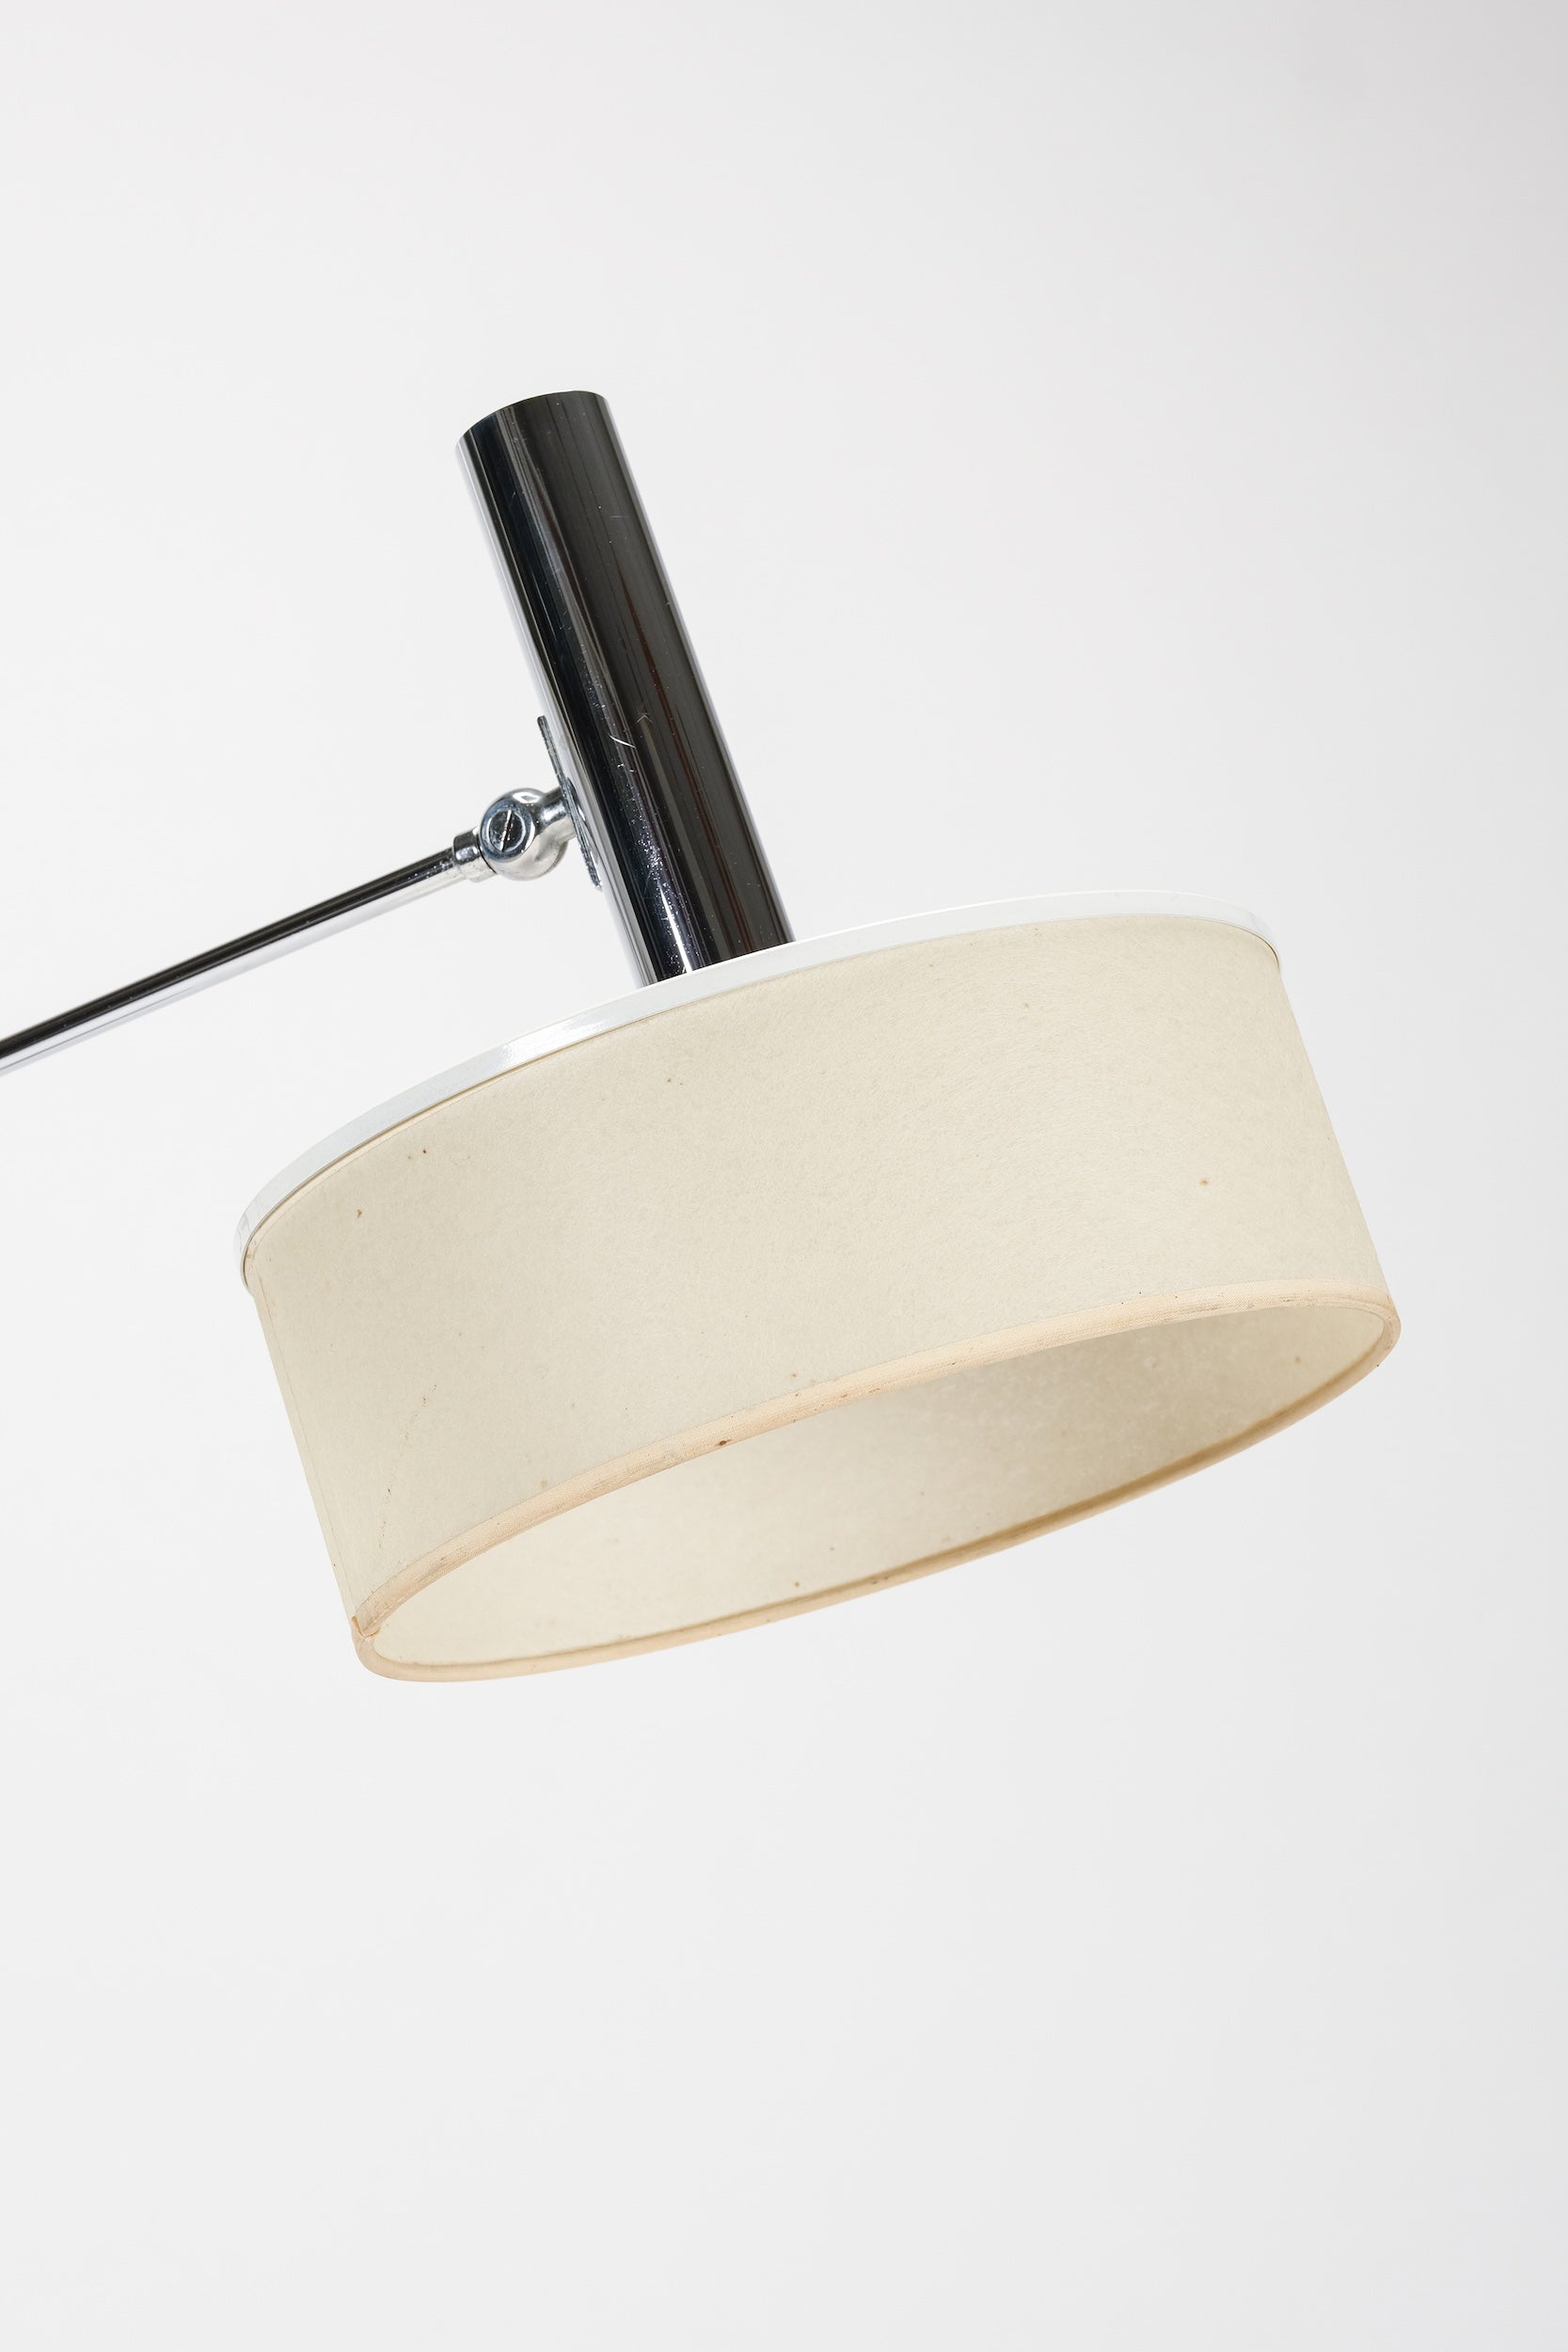 Floor Lamp, Height Adjustable, Swisslamp International, 50s